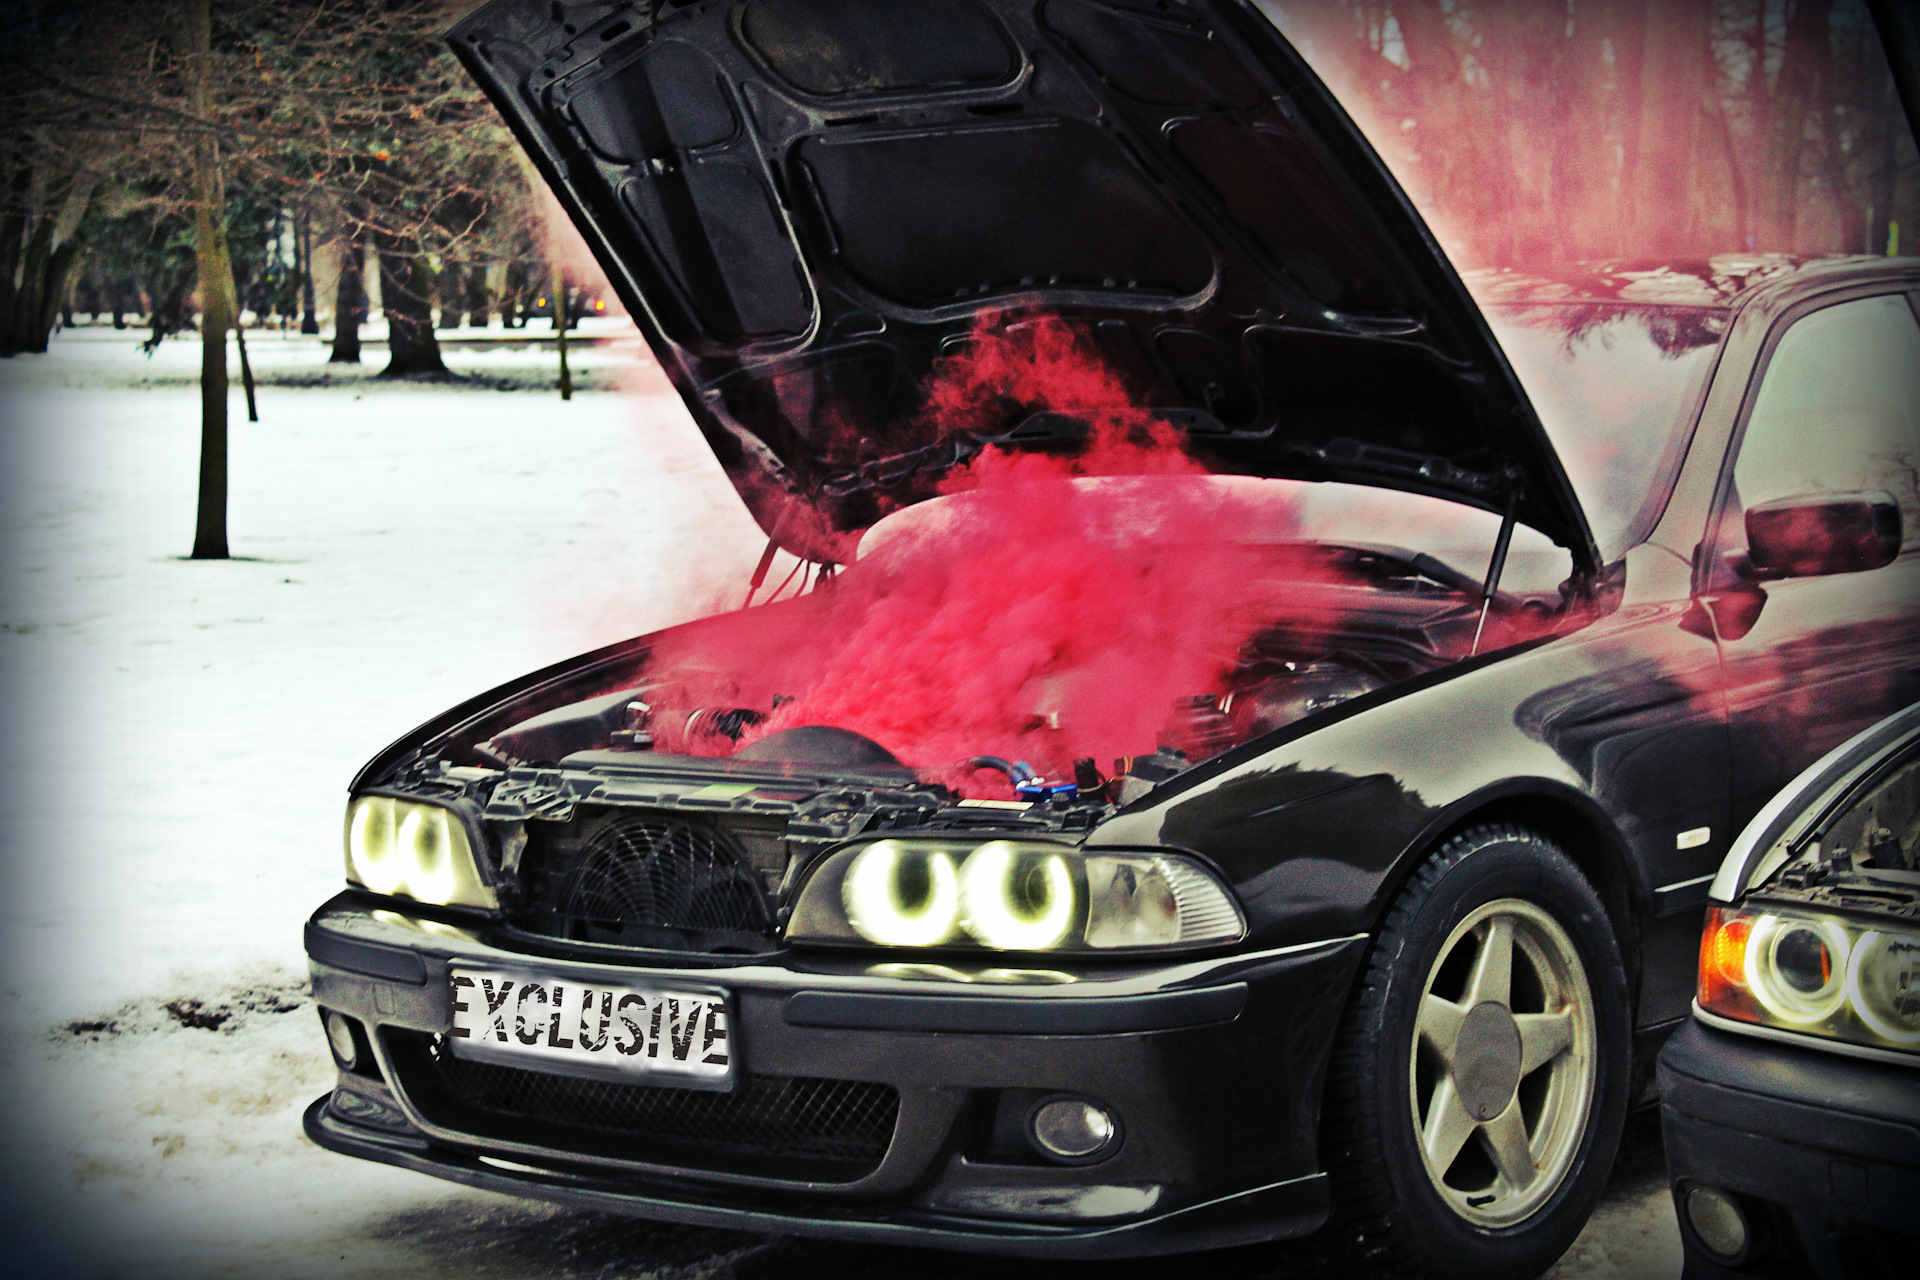 Капот пошел дым. Дым цветной BMW e39. Дым машина. Цветной дым и авто. Дым из под капота.